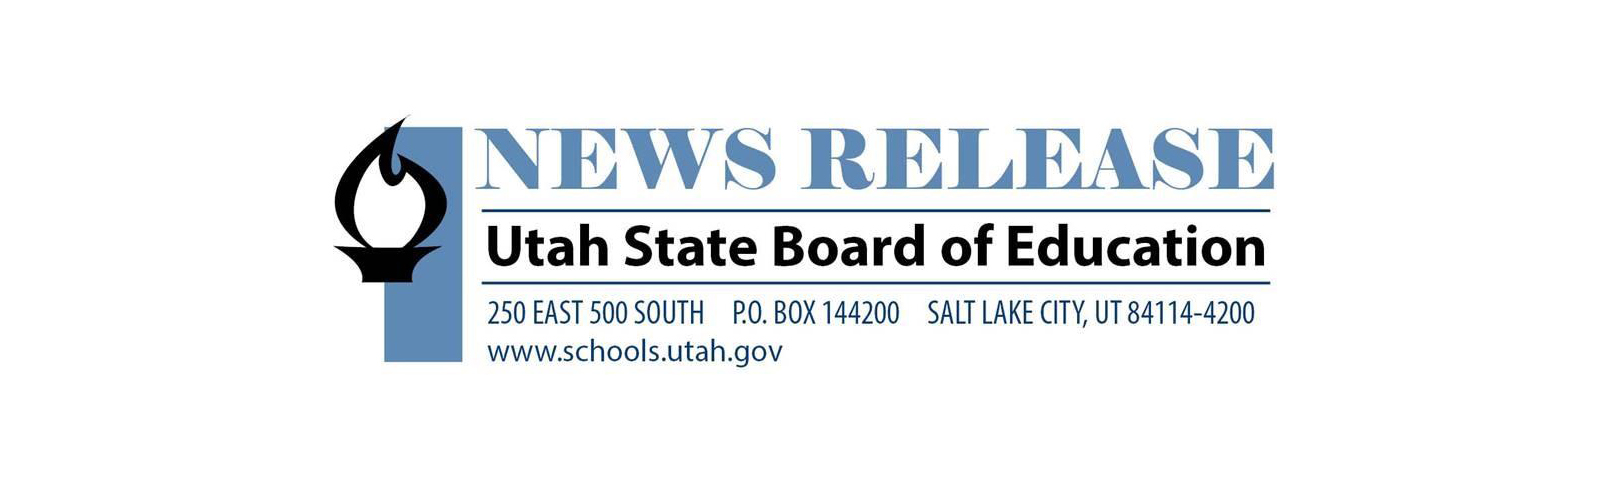 Utah State Board of Education News Release logo